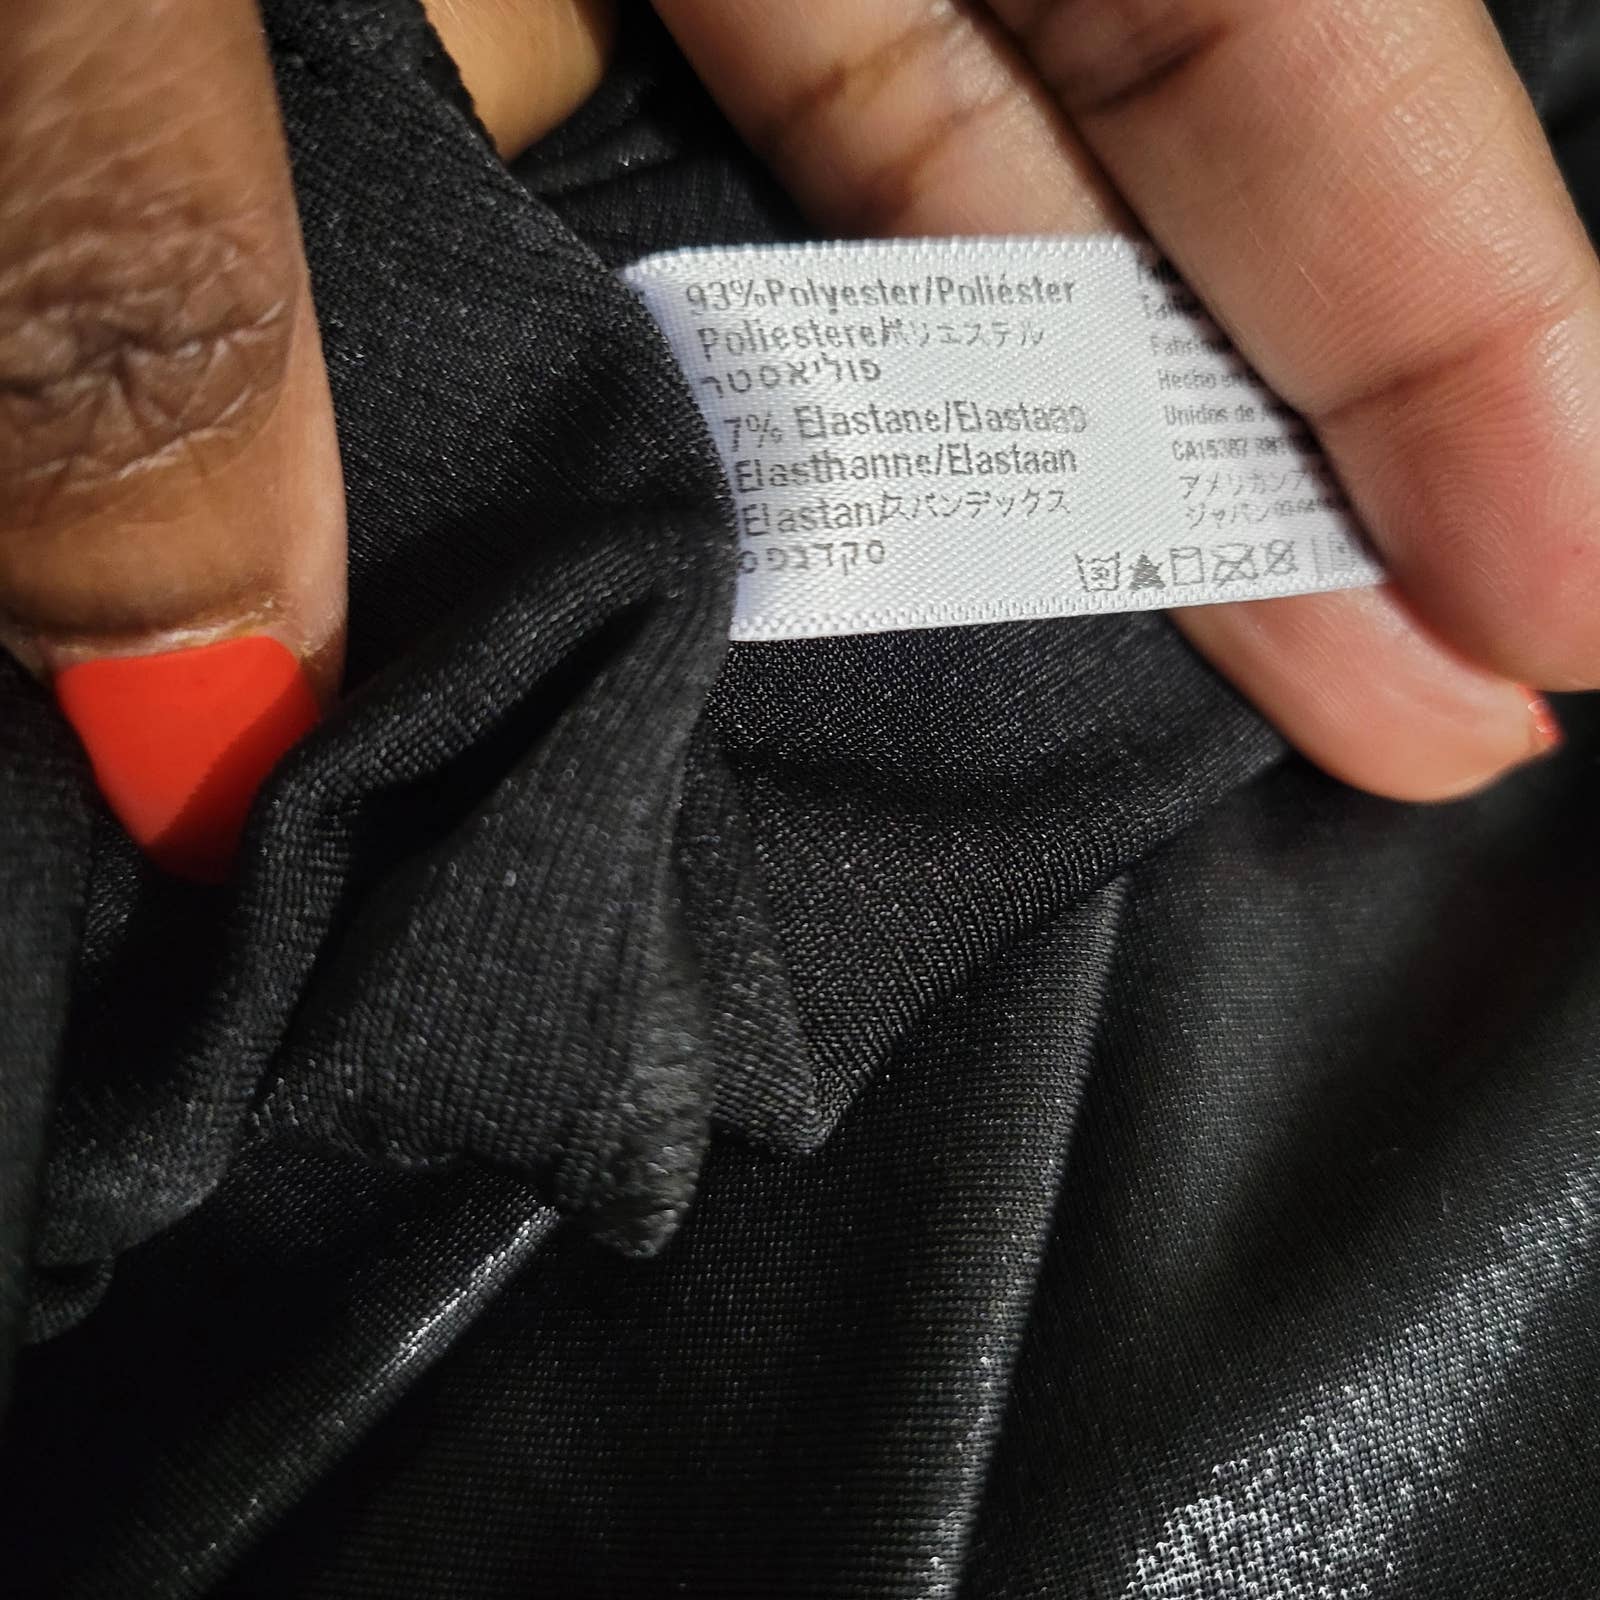 American Apparel Midi Slip Dress Black Metallic Jersey Liquid Wet Look Shiny Size XS